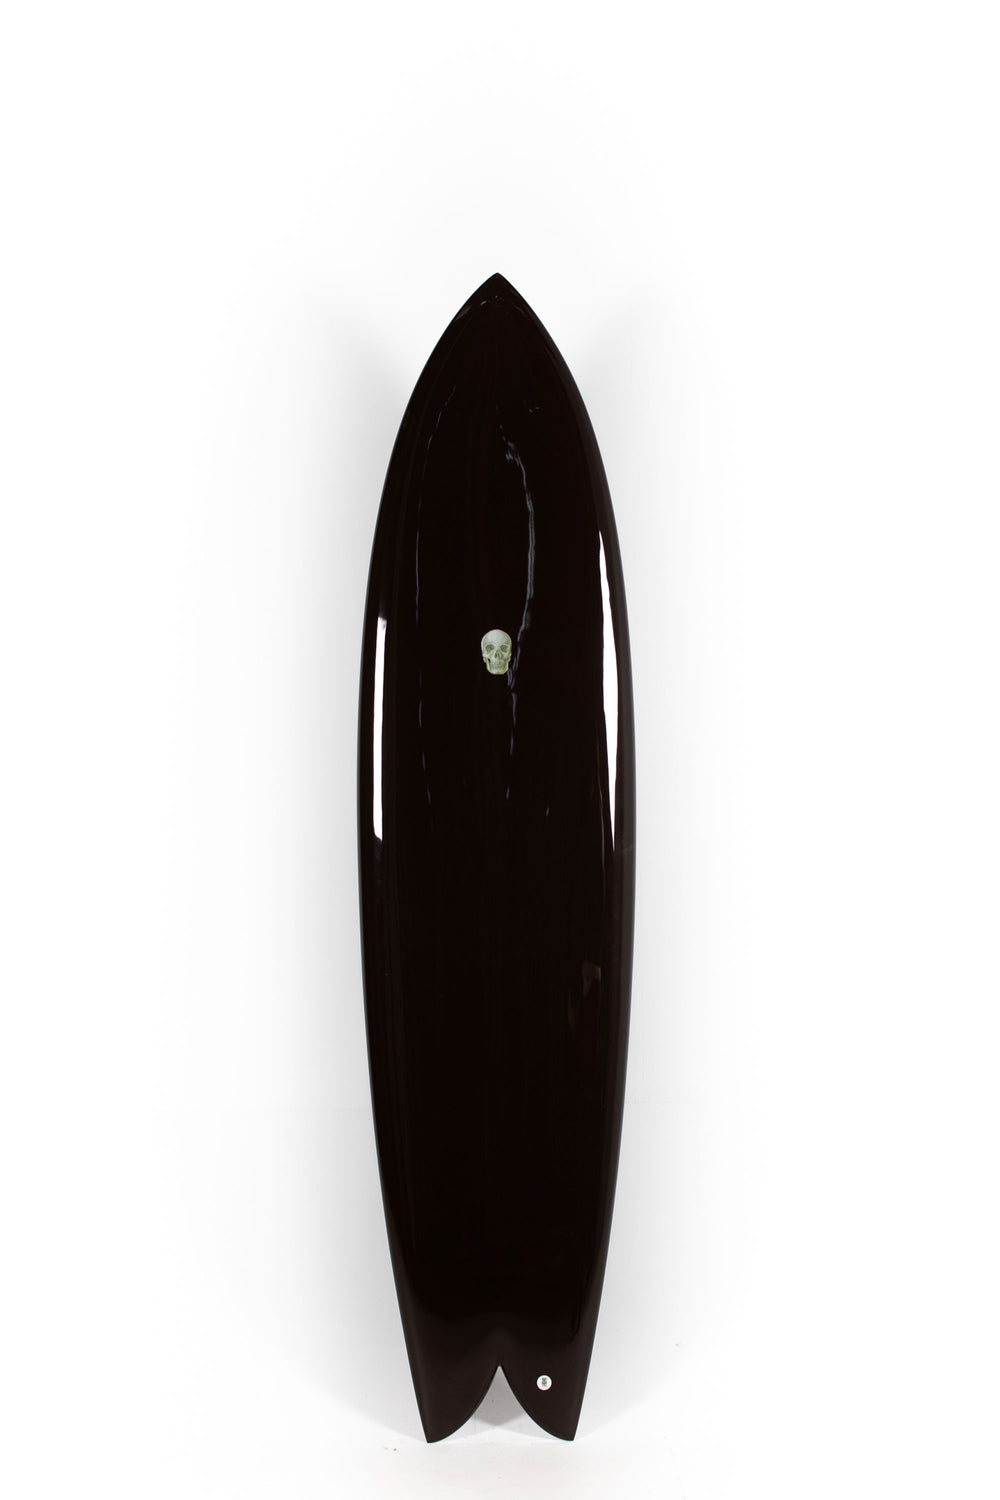 Pukas Surf Shop - Christenson Surfboards - LONG PHISH - 7'4